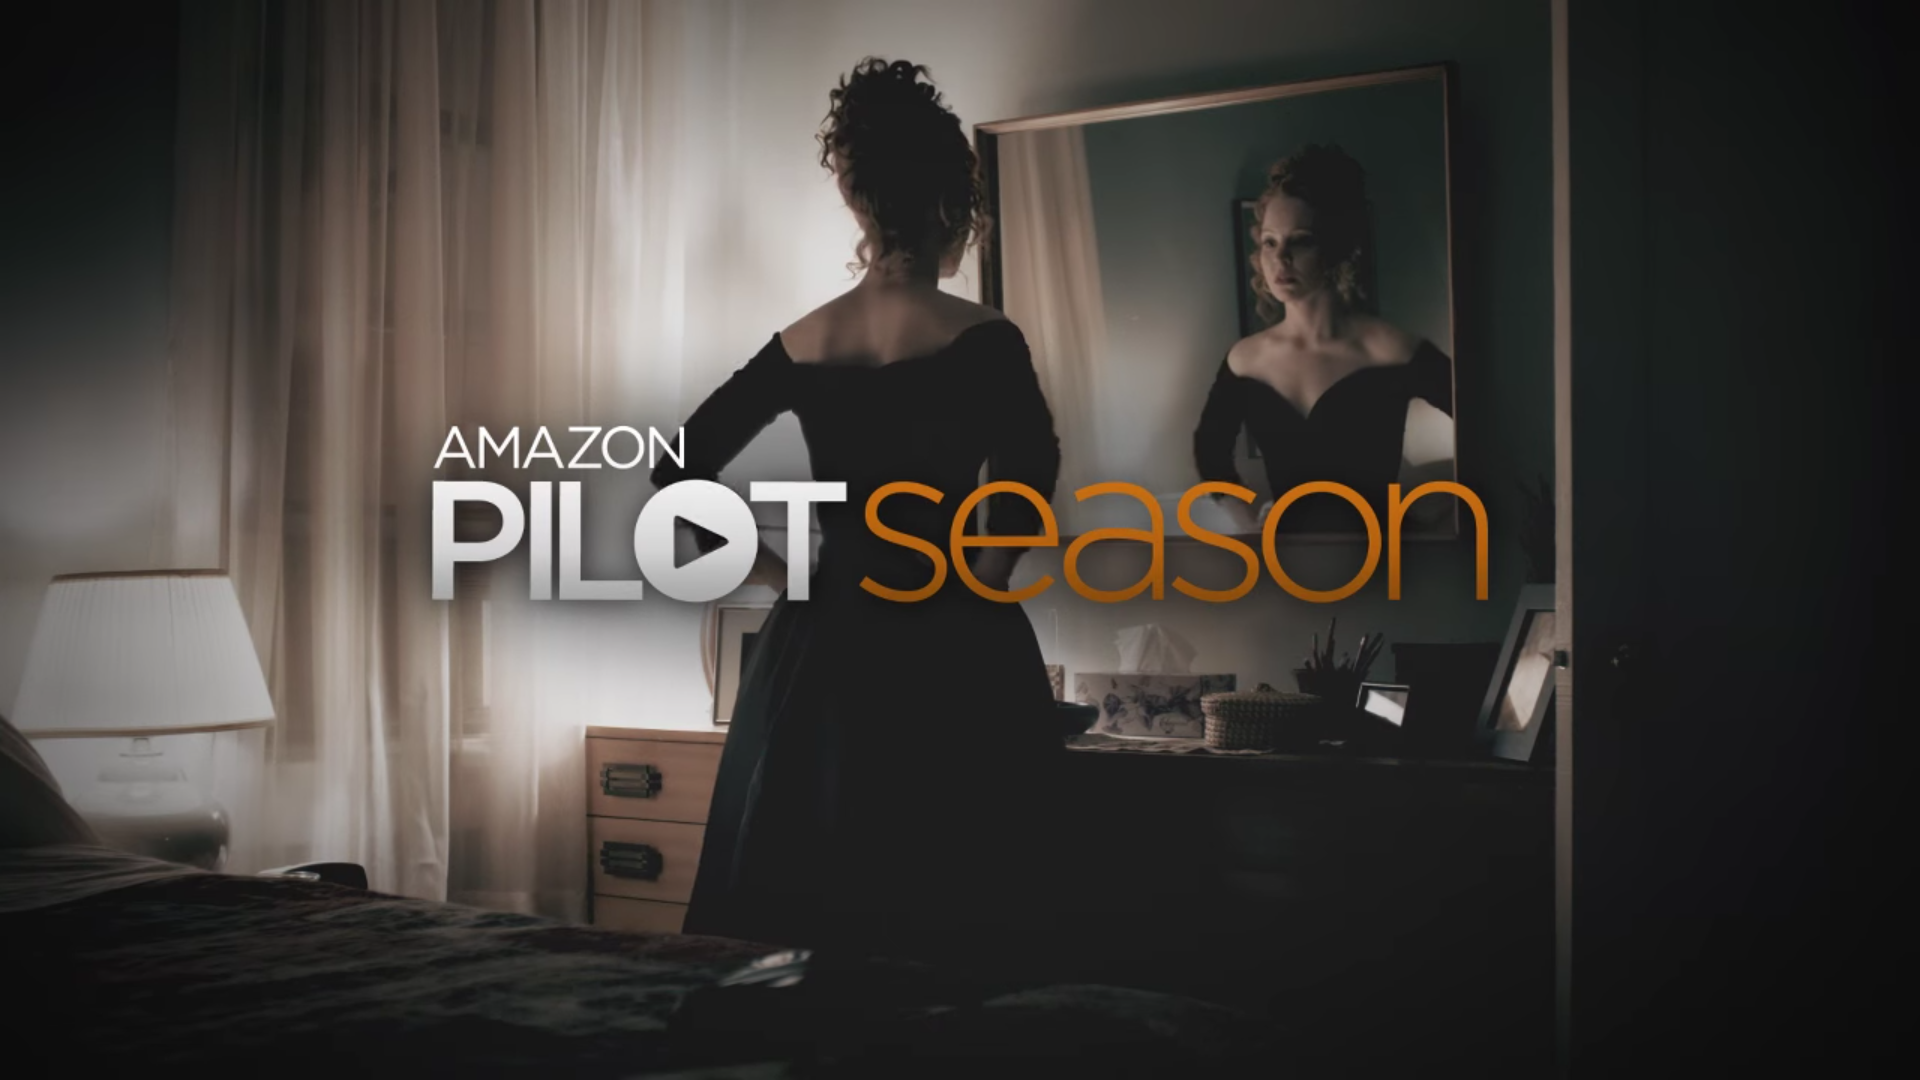 Amazon Prime Video pilot season screenshot. Photo by: Amazon Video / YouTube